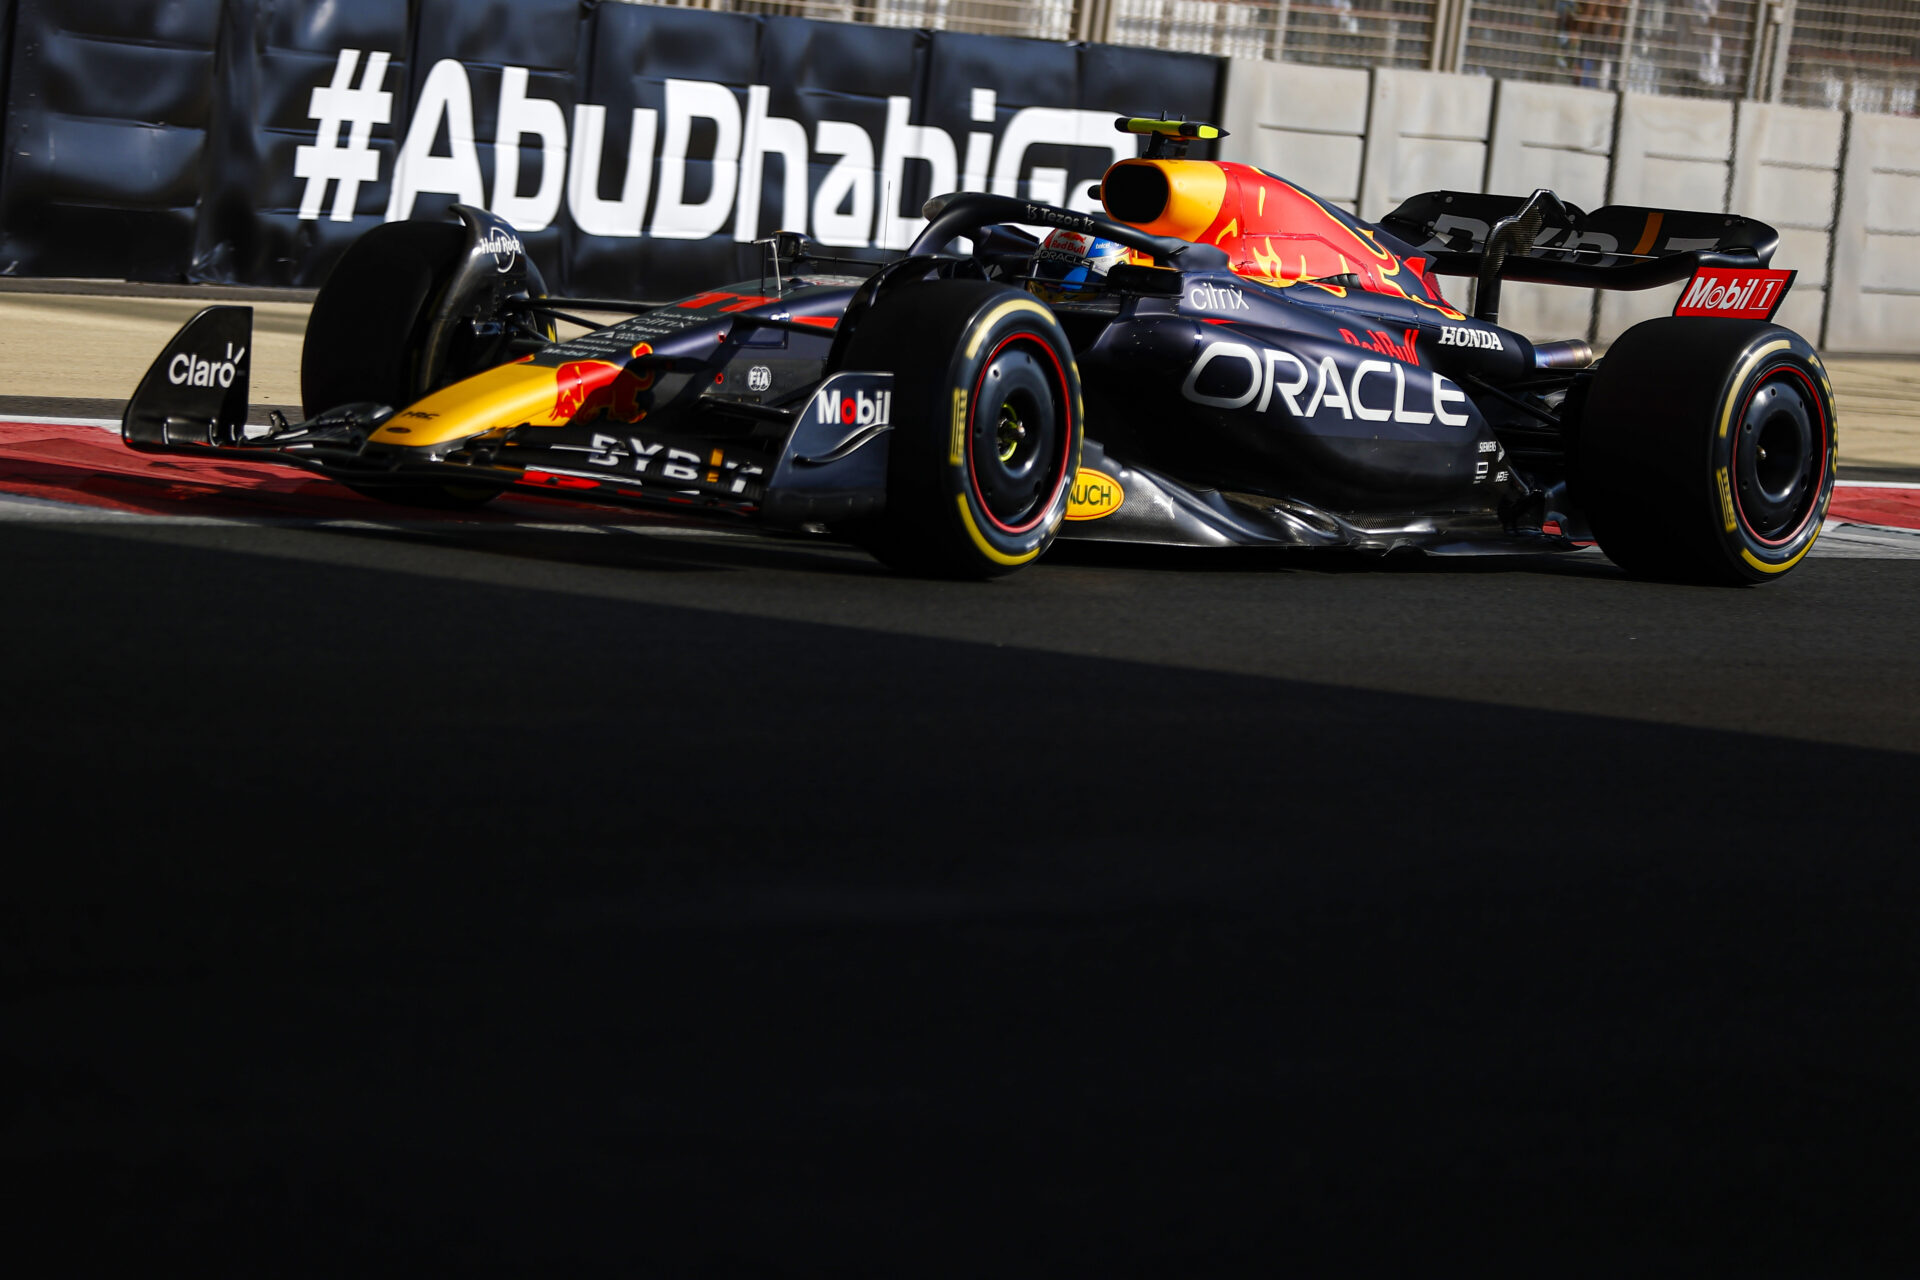 Abou Dhabi F1